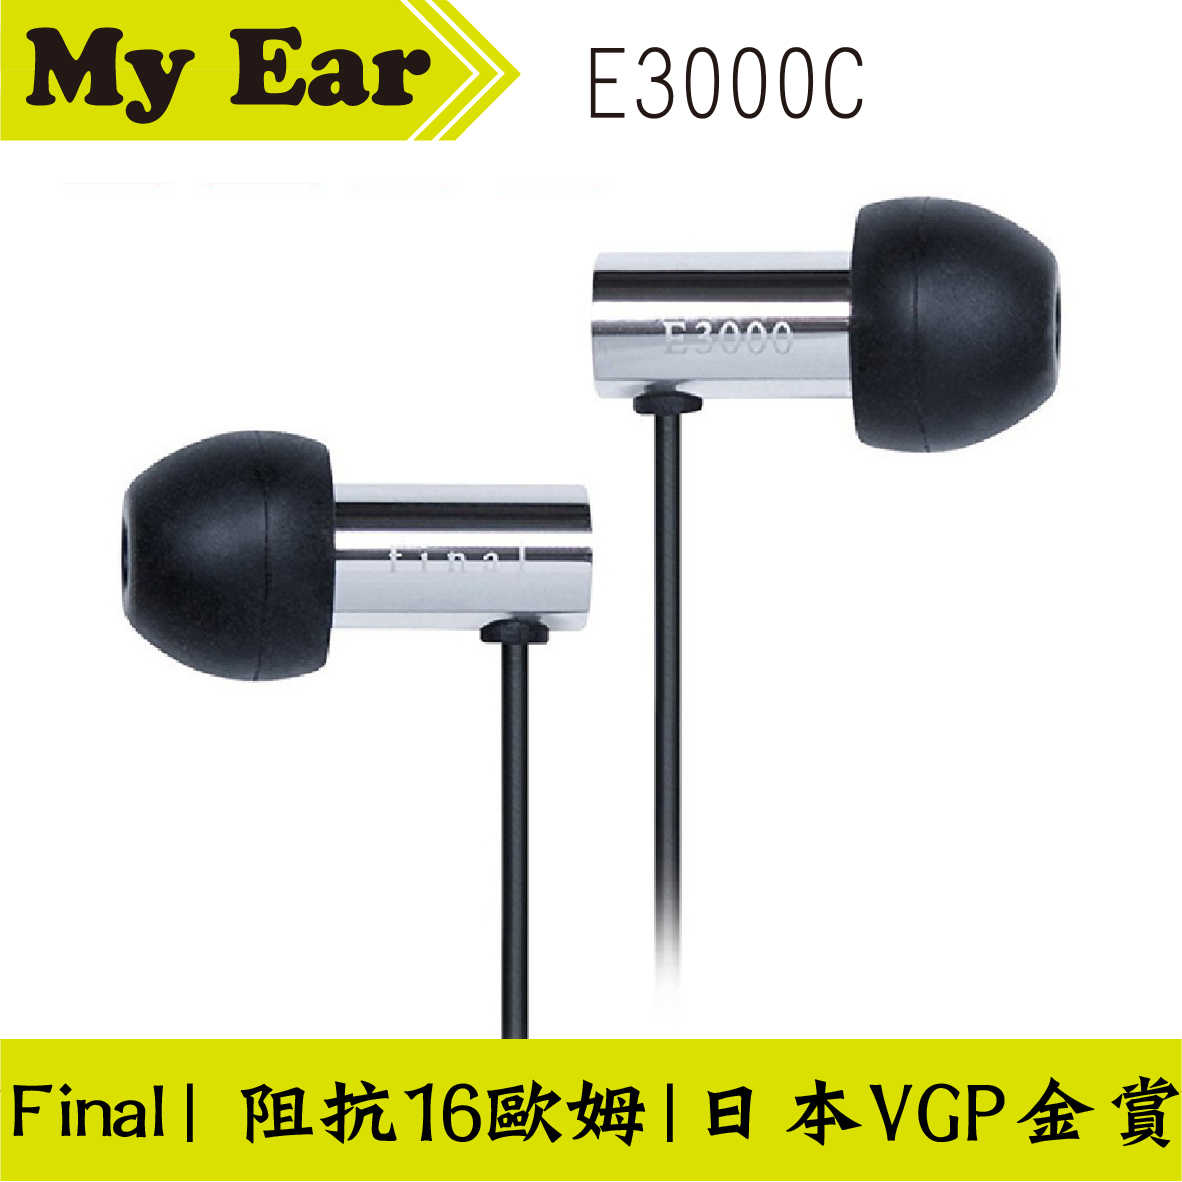 Final E3000C 入耳式 耳機 日本VGP金賞 | My Ear 耳機專門店